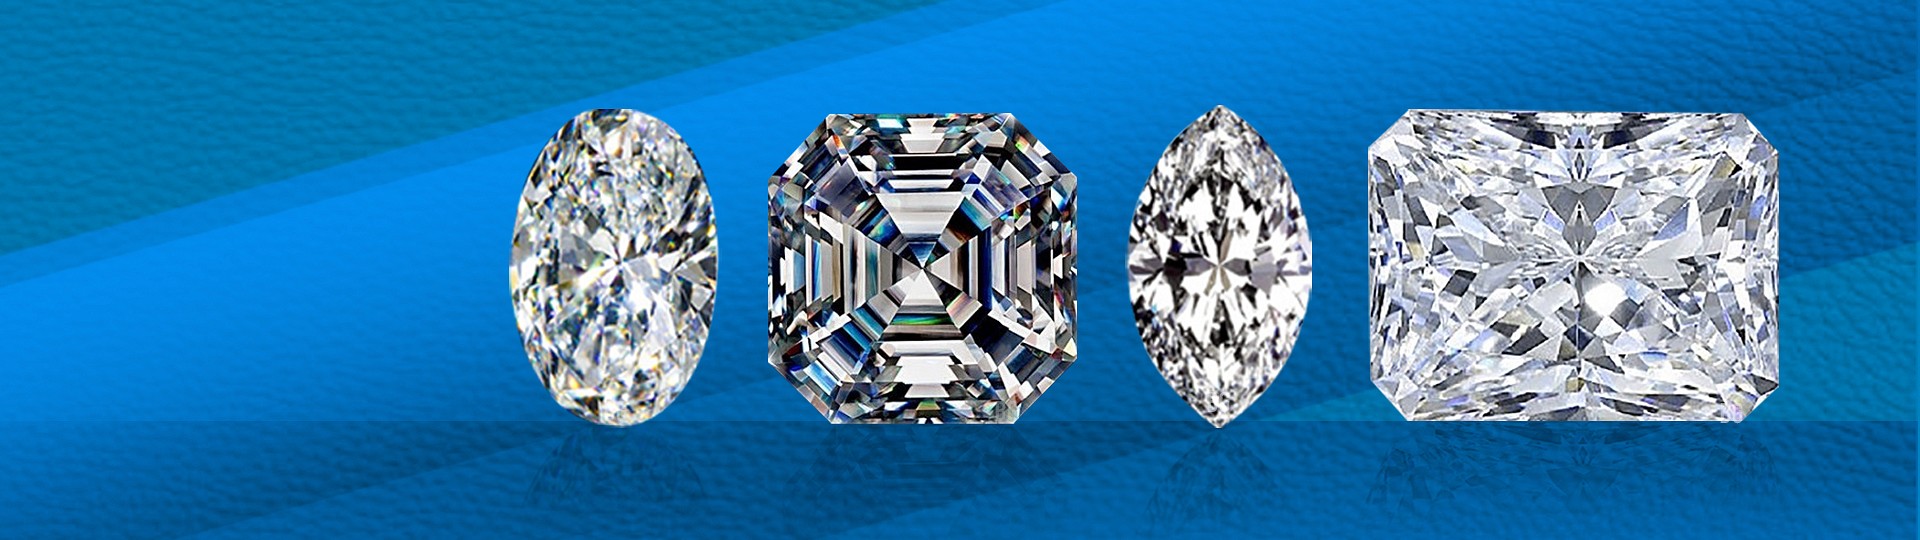 'Creme De La Creme' Investment GIA Diamonds by Bid Global International Auctioneers LLC